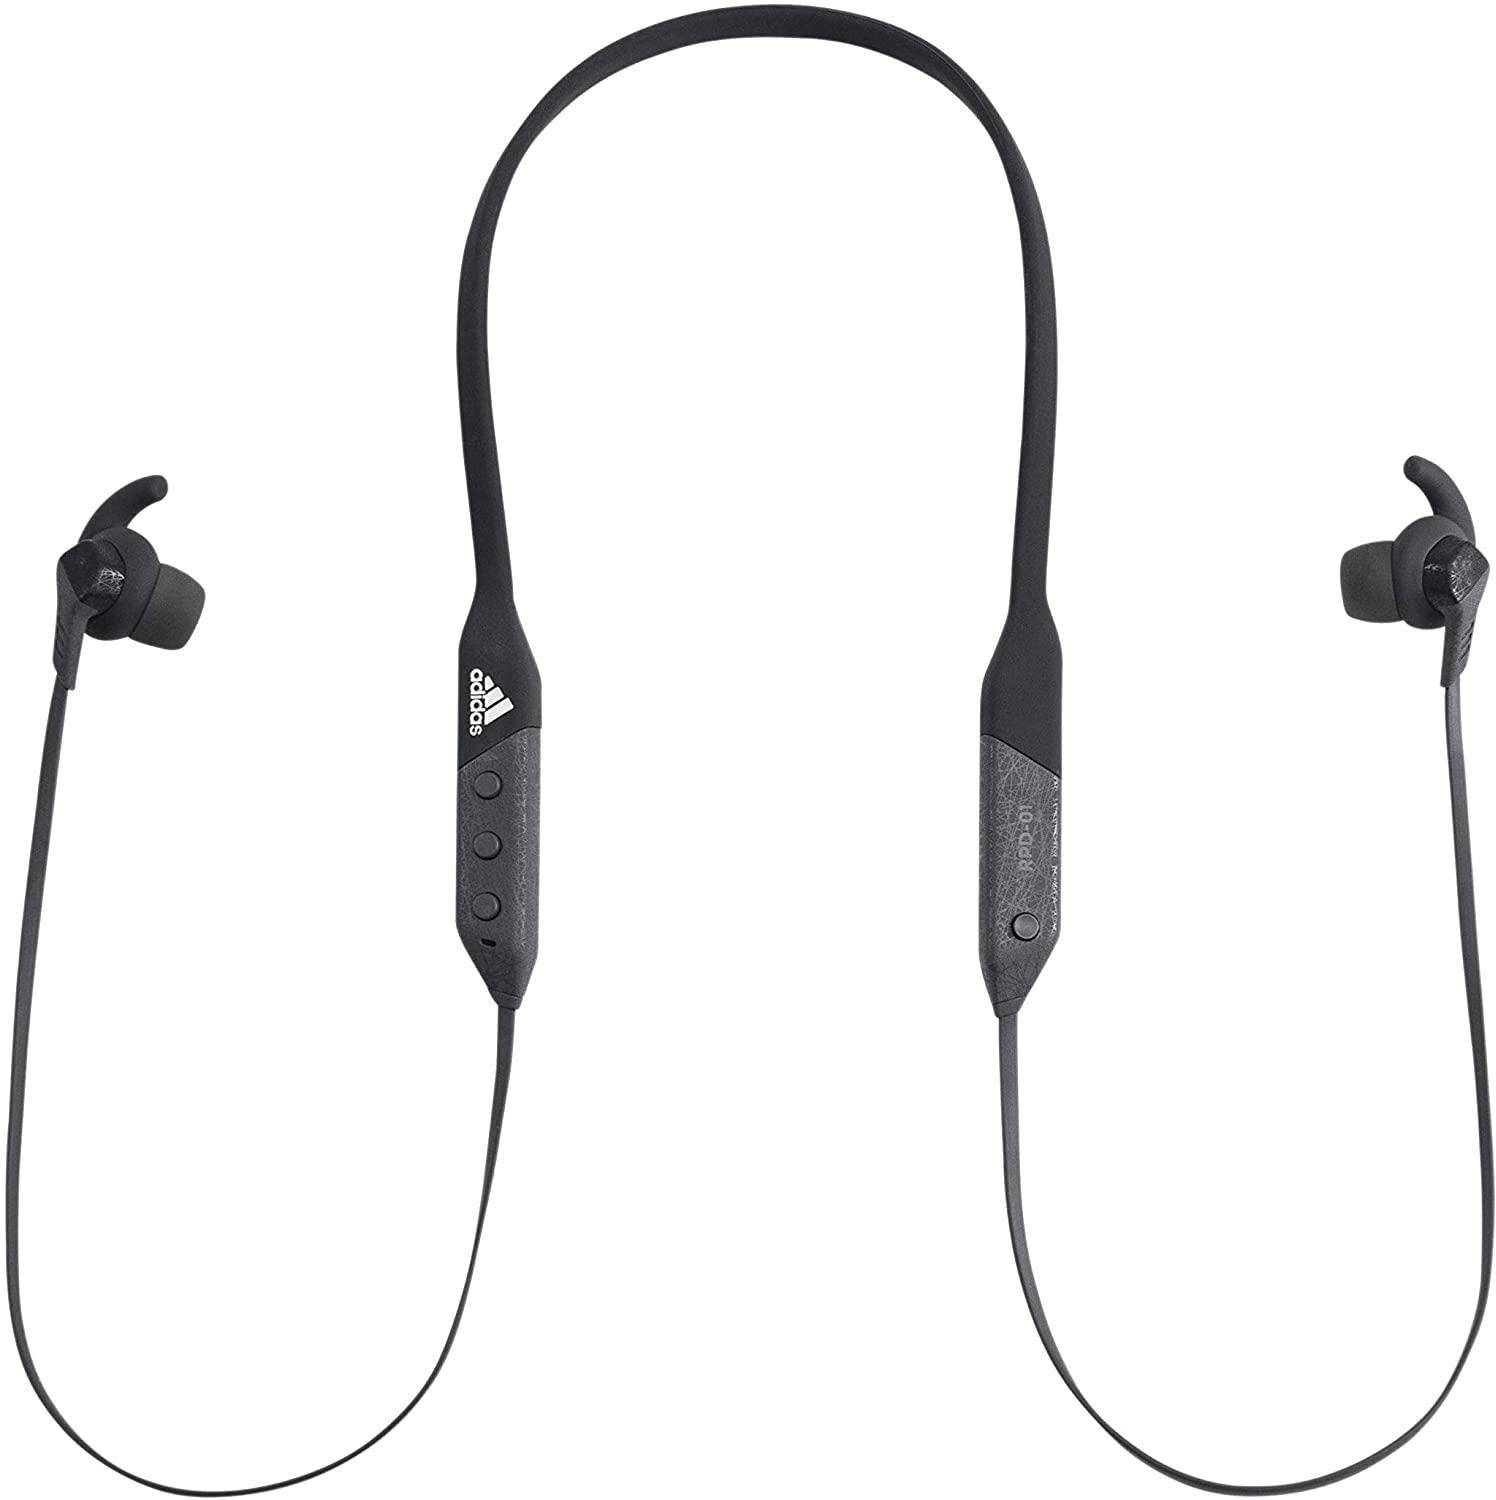 Adidas RPD-01 In-Ear Wireless Bluetooth Sport Headphones zoom image